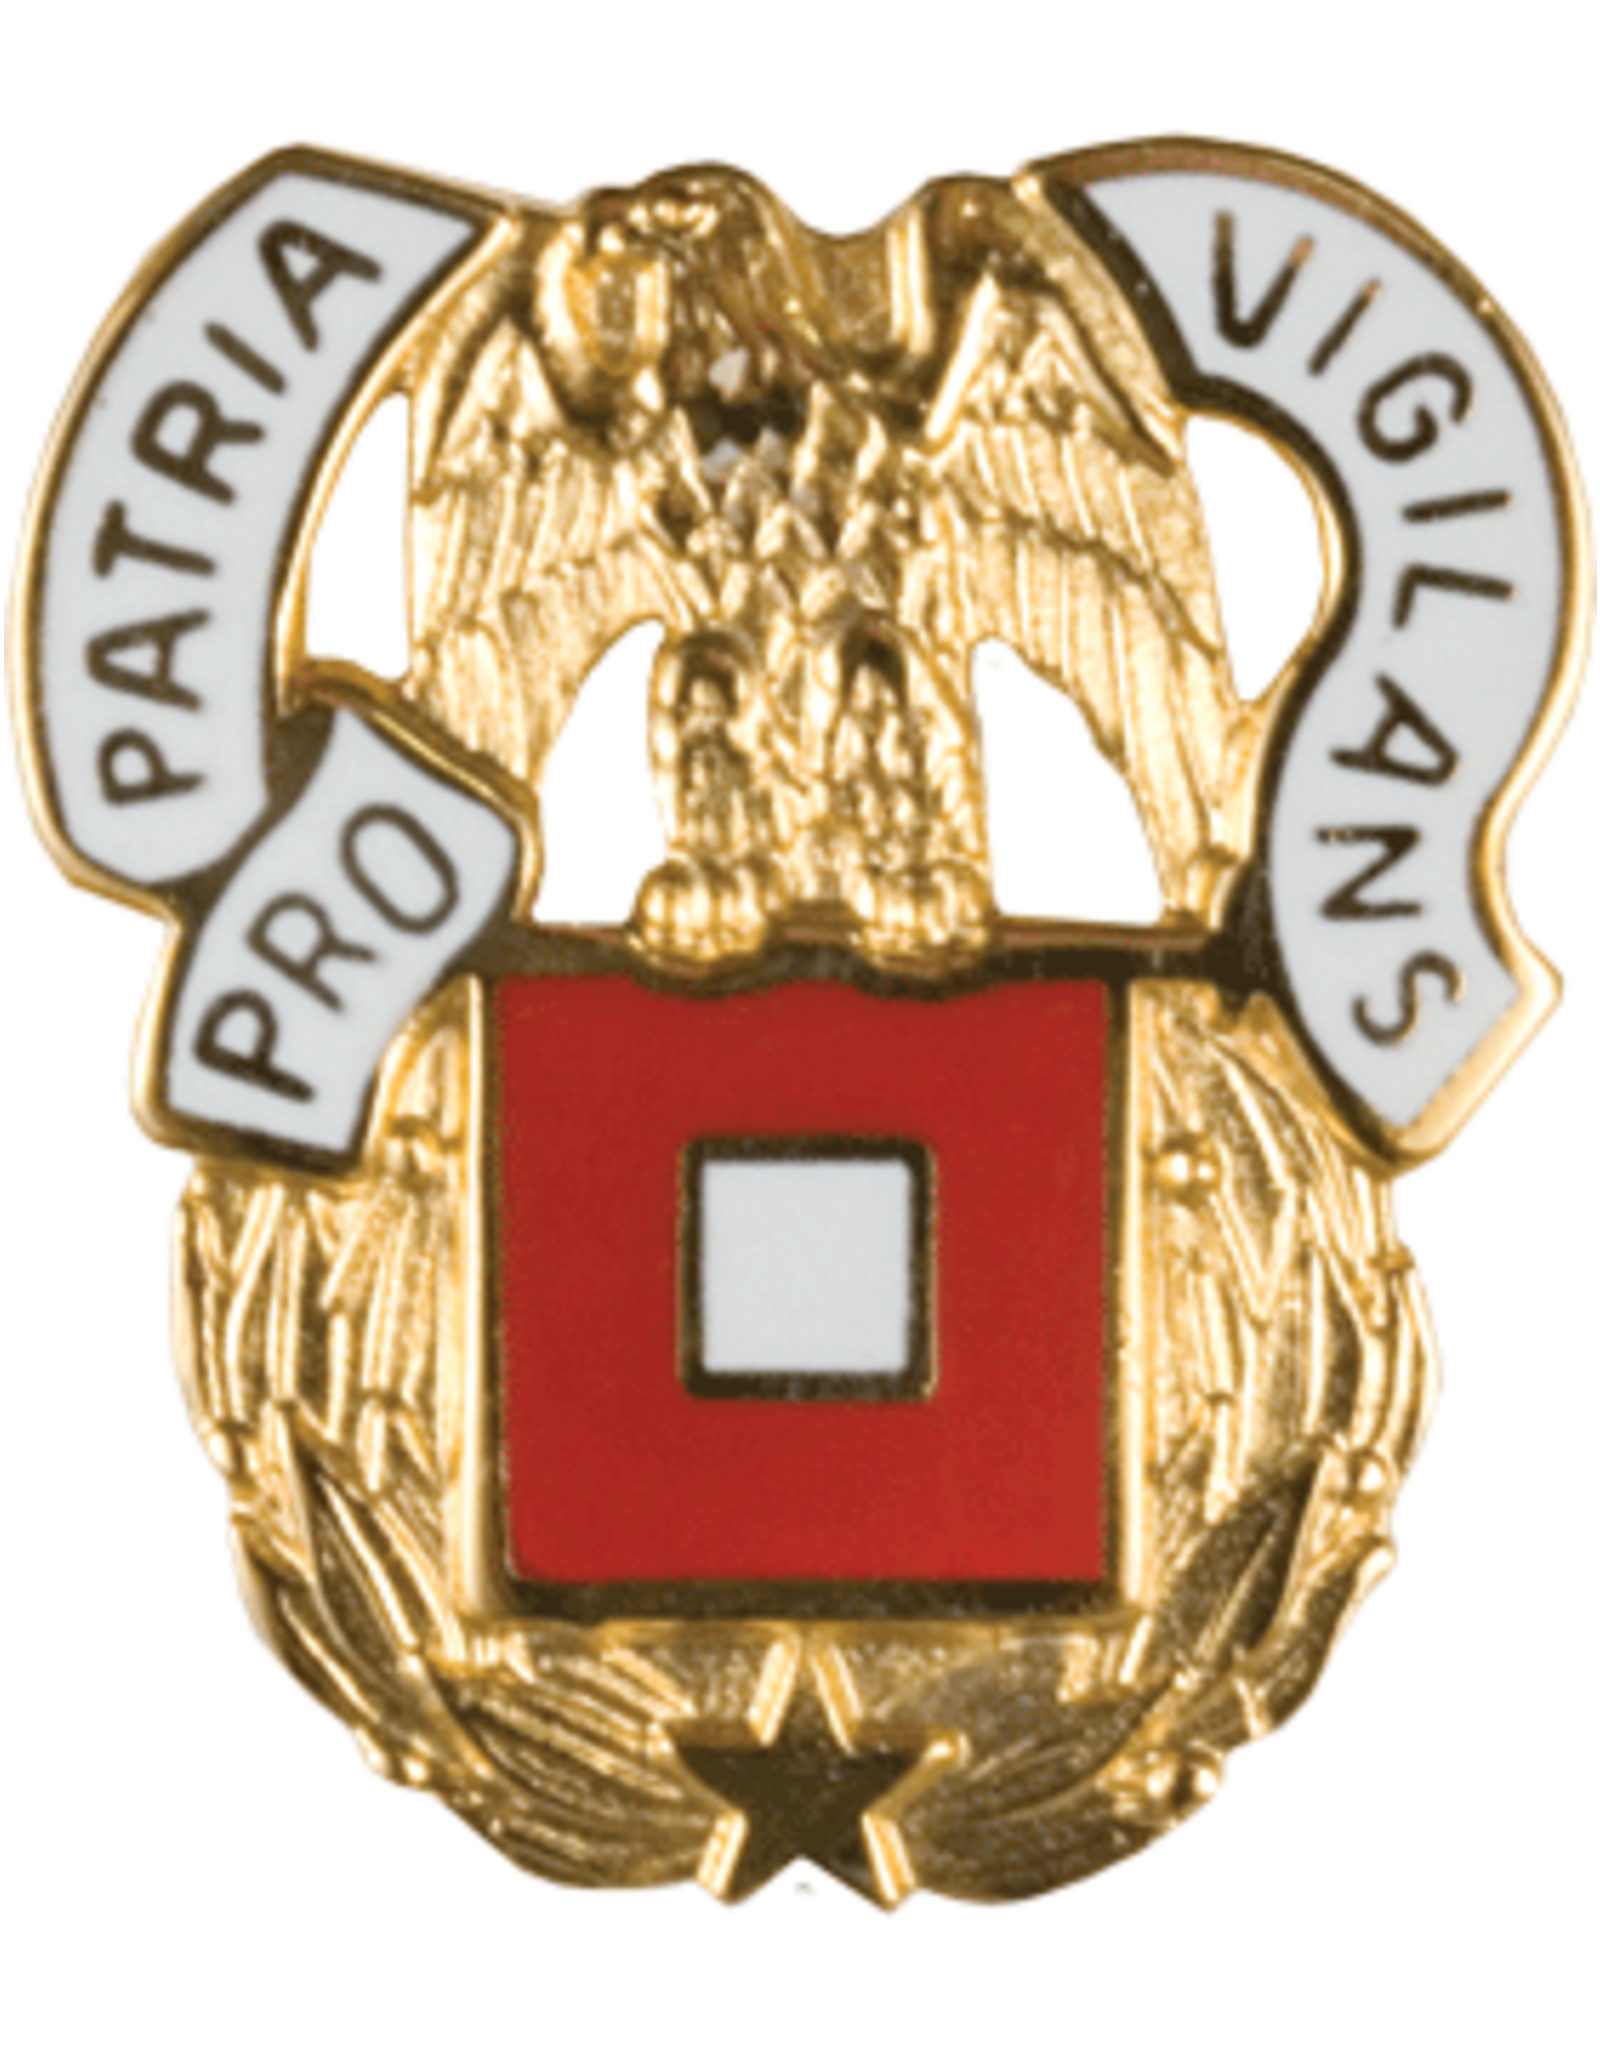 Signal Regimental Crest